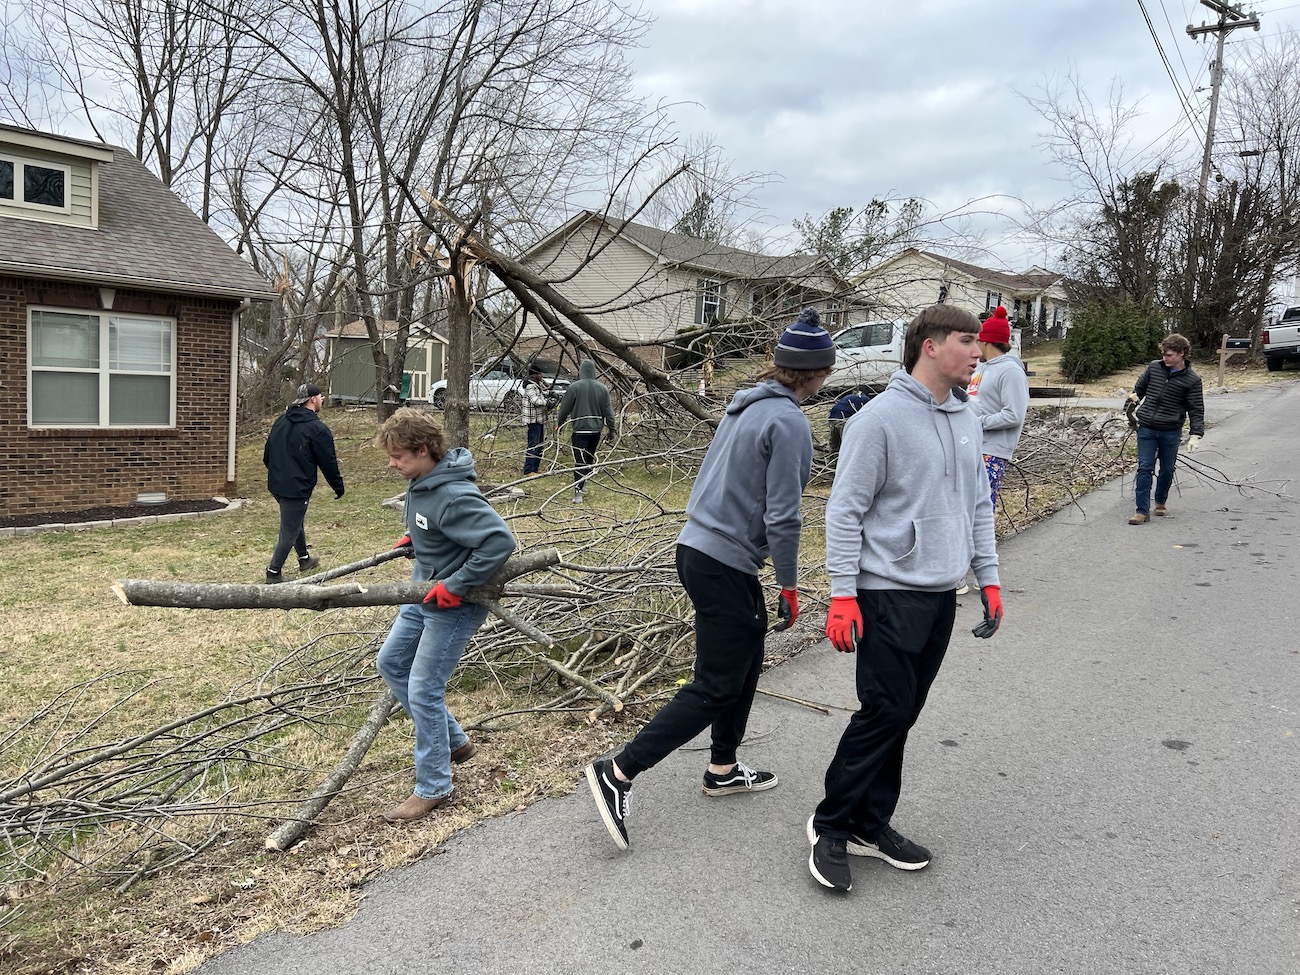 APSU's baseball team helps clean debris after the tornado.